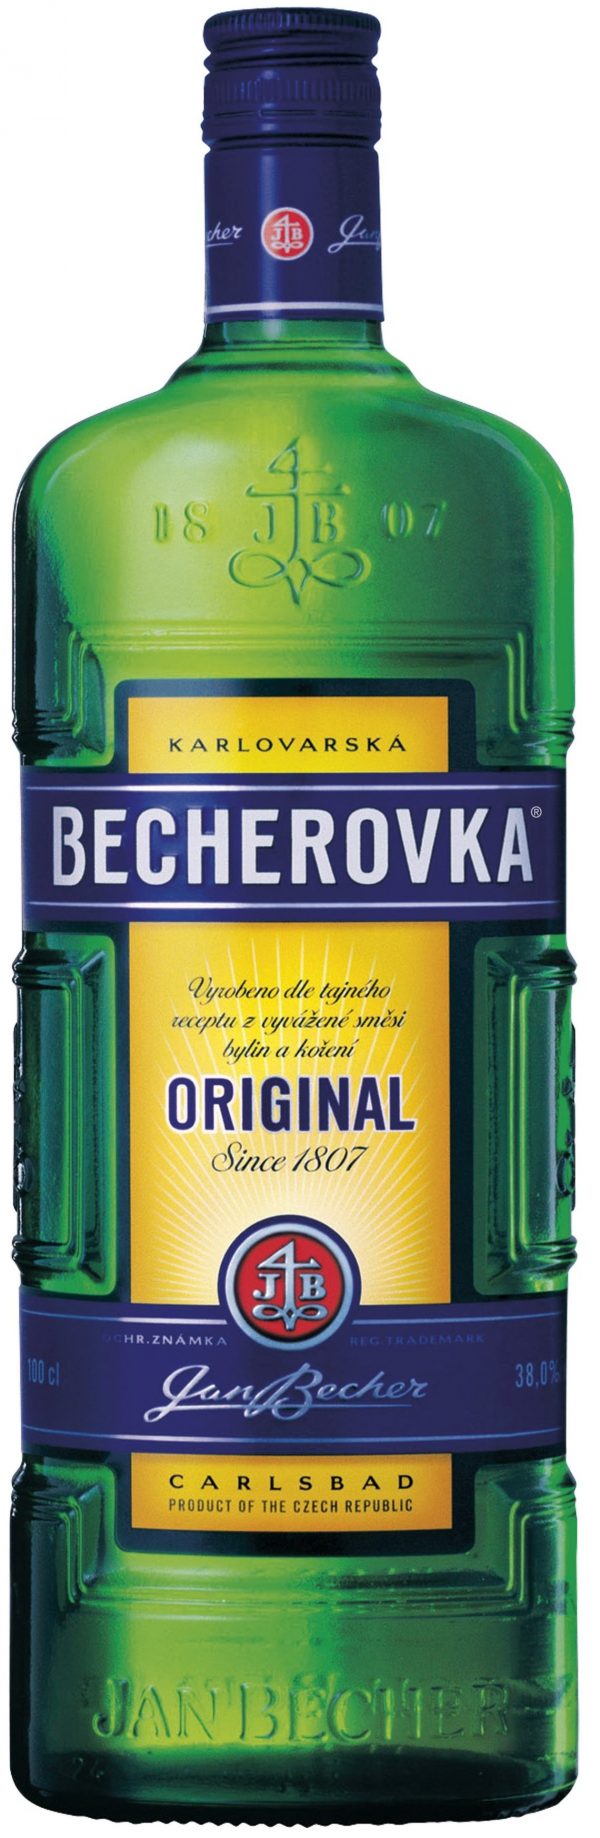 Zoom to enlarge the Becherovka Original Liqueur